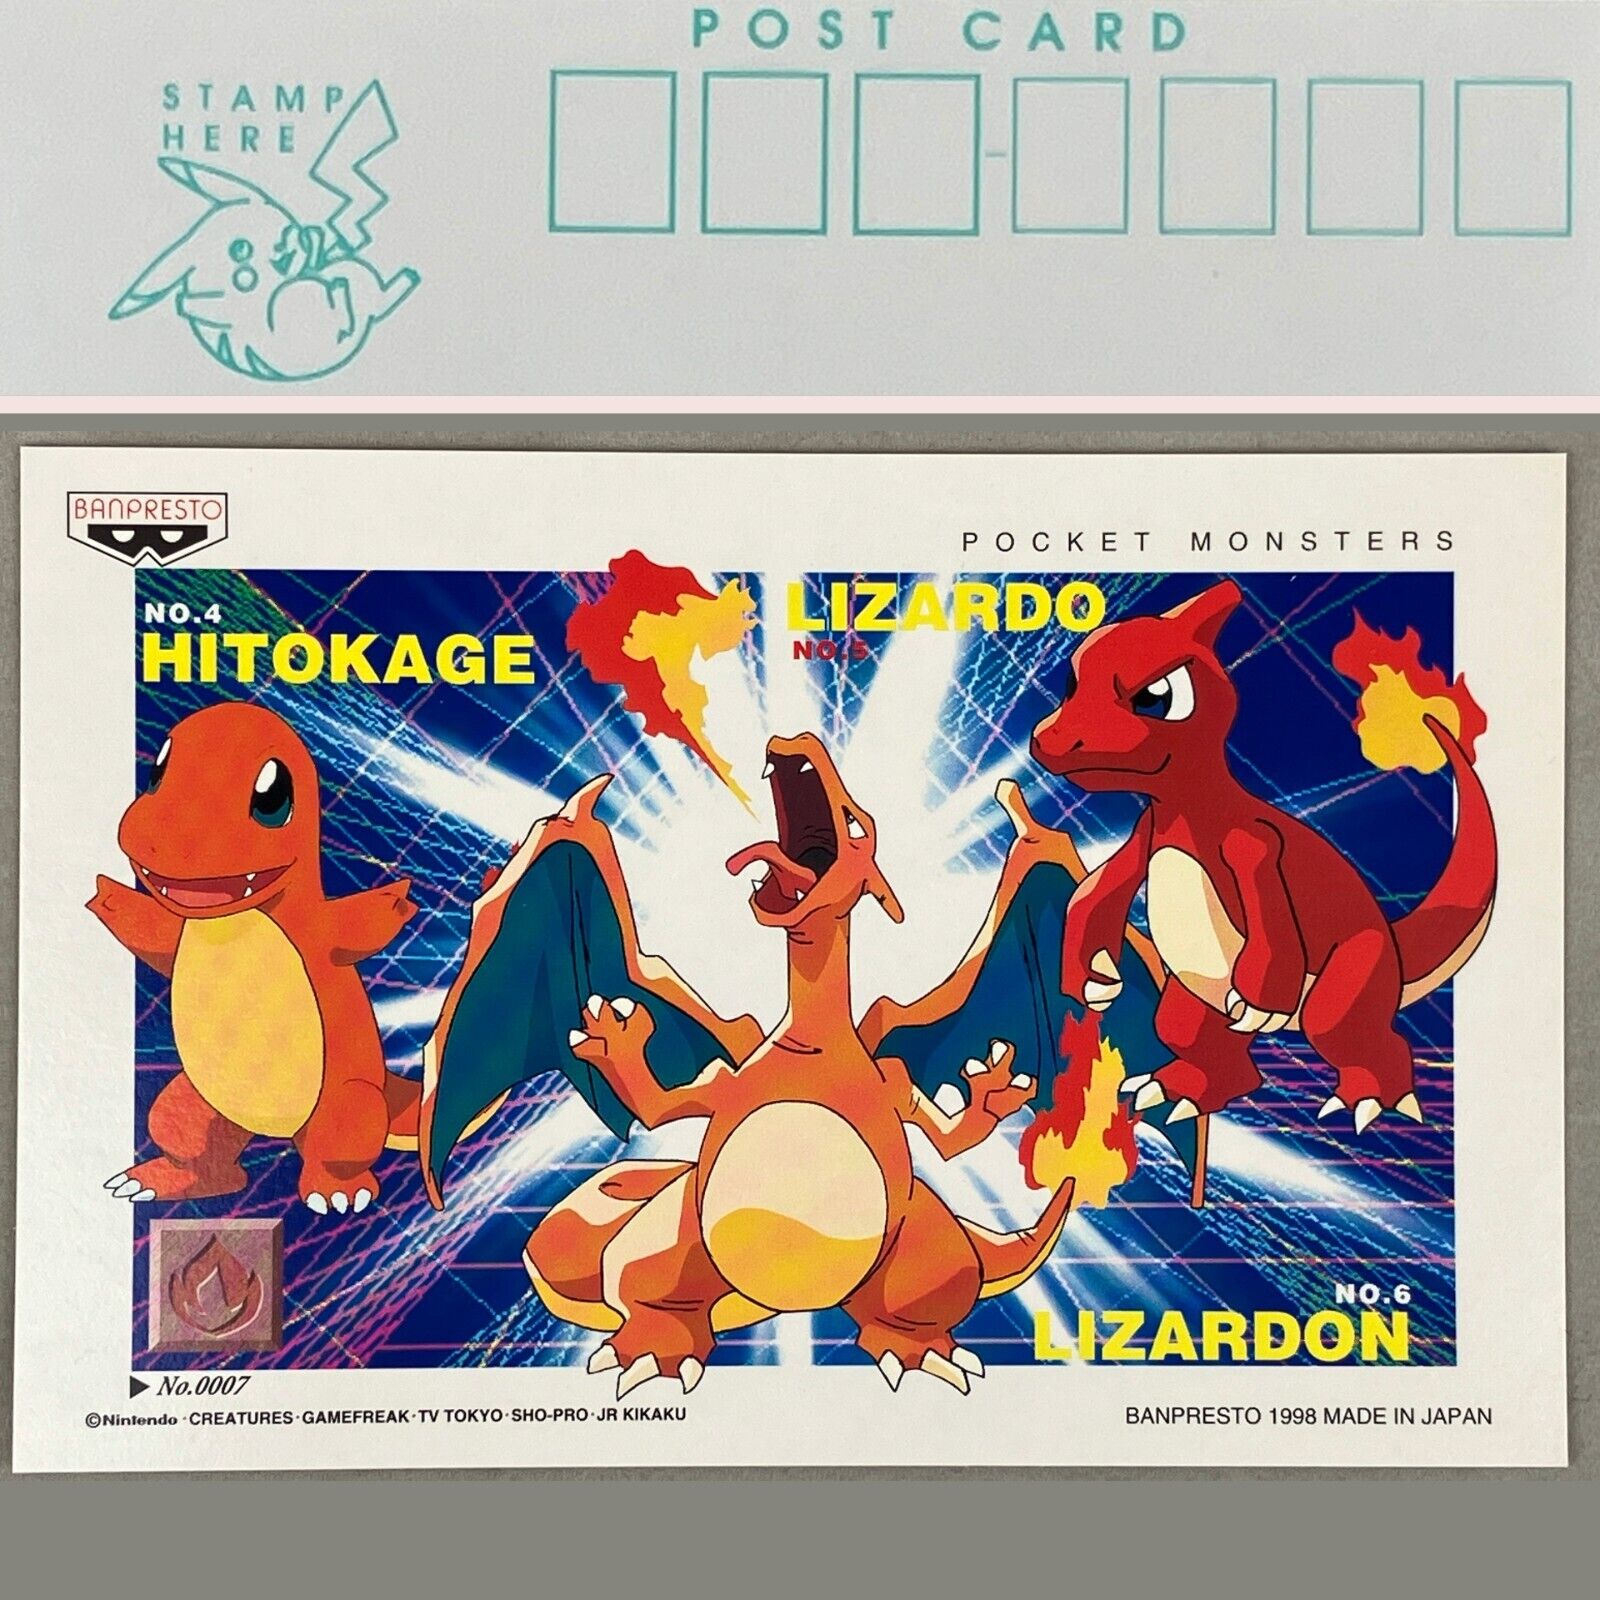 1998 Banpresto Pokémon Charizard Charmander 0007 Mail Collection Anime Postcard